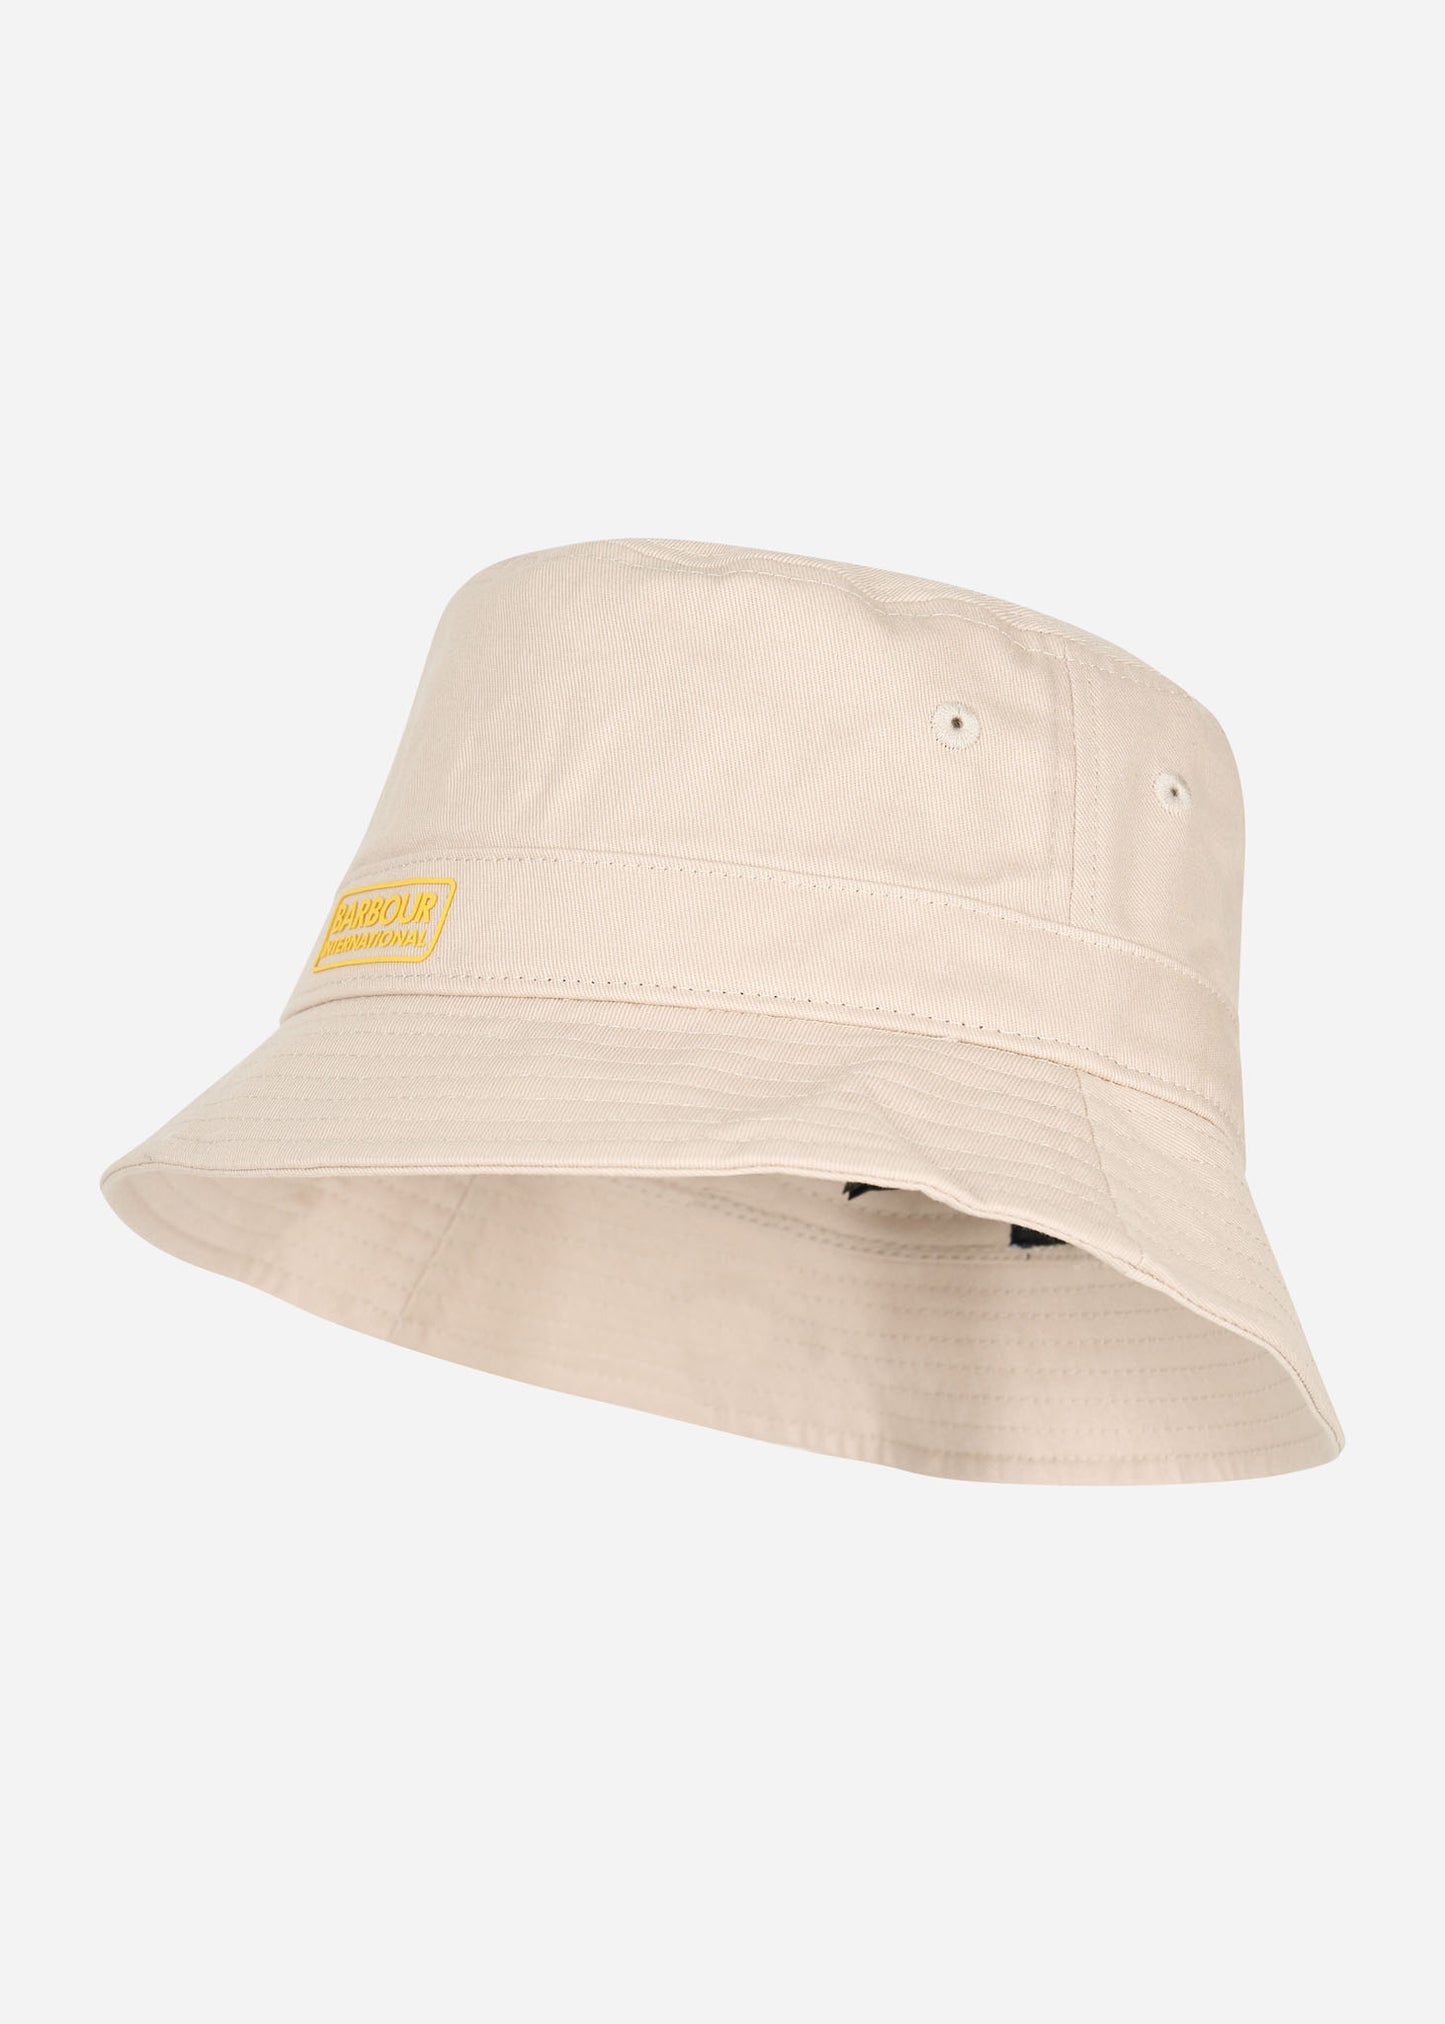 Barbour International Bucket Hats  Norton drill sports hat - mist 